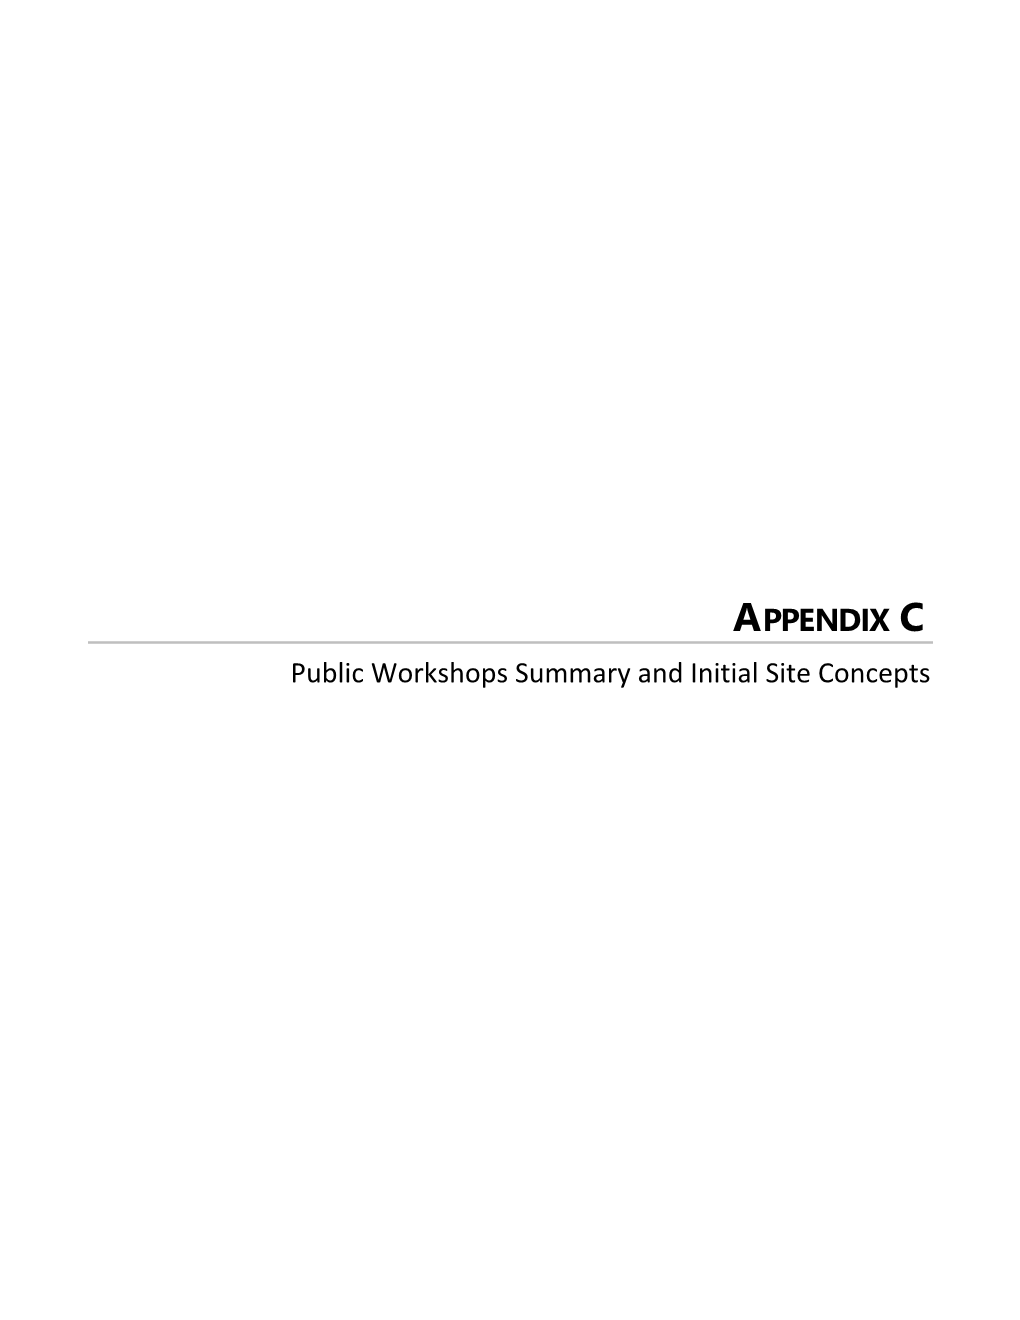 APPENDIX C Public Workshops Summary and Initial Site Concepts